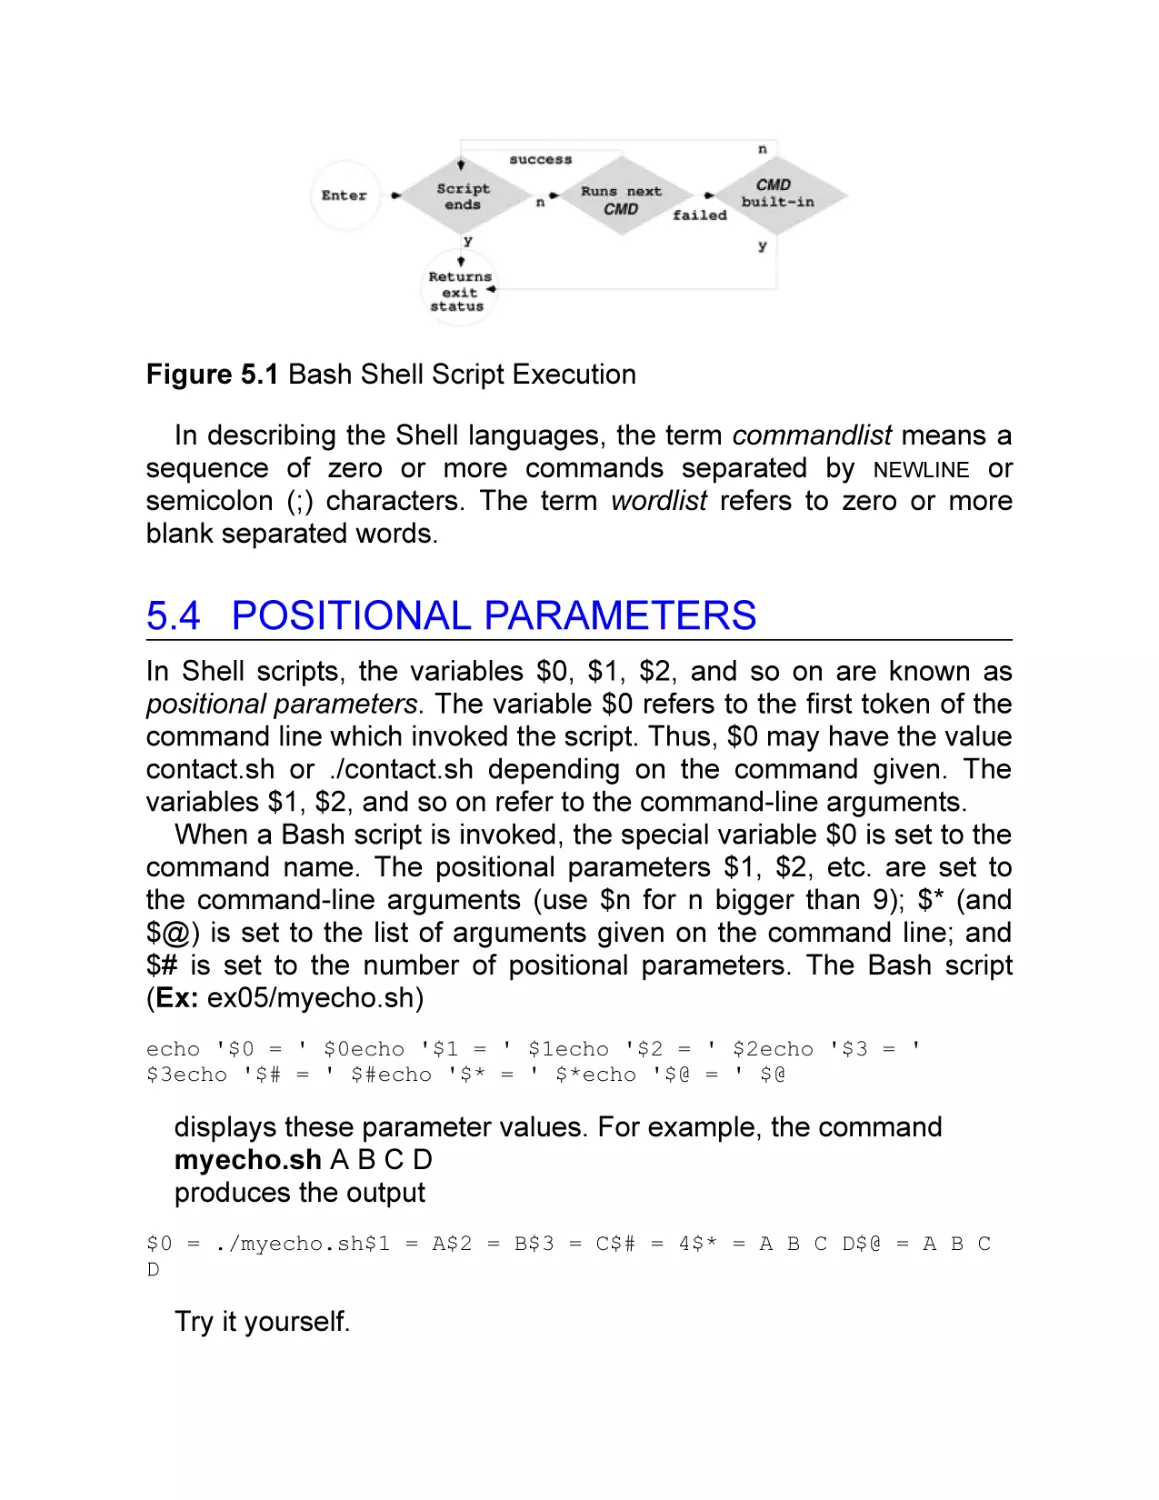 5.4 Positional Parameters